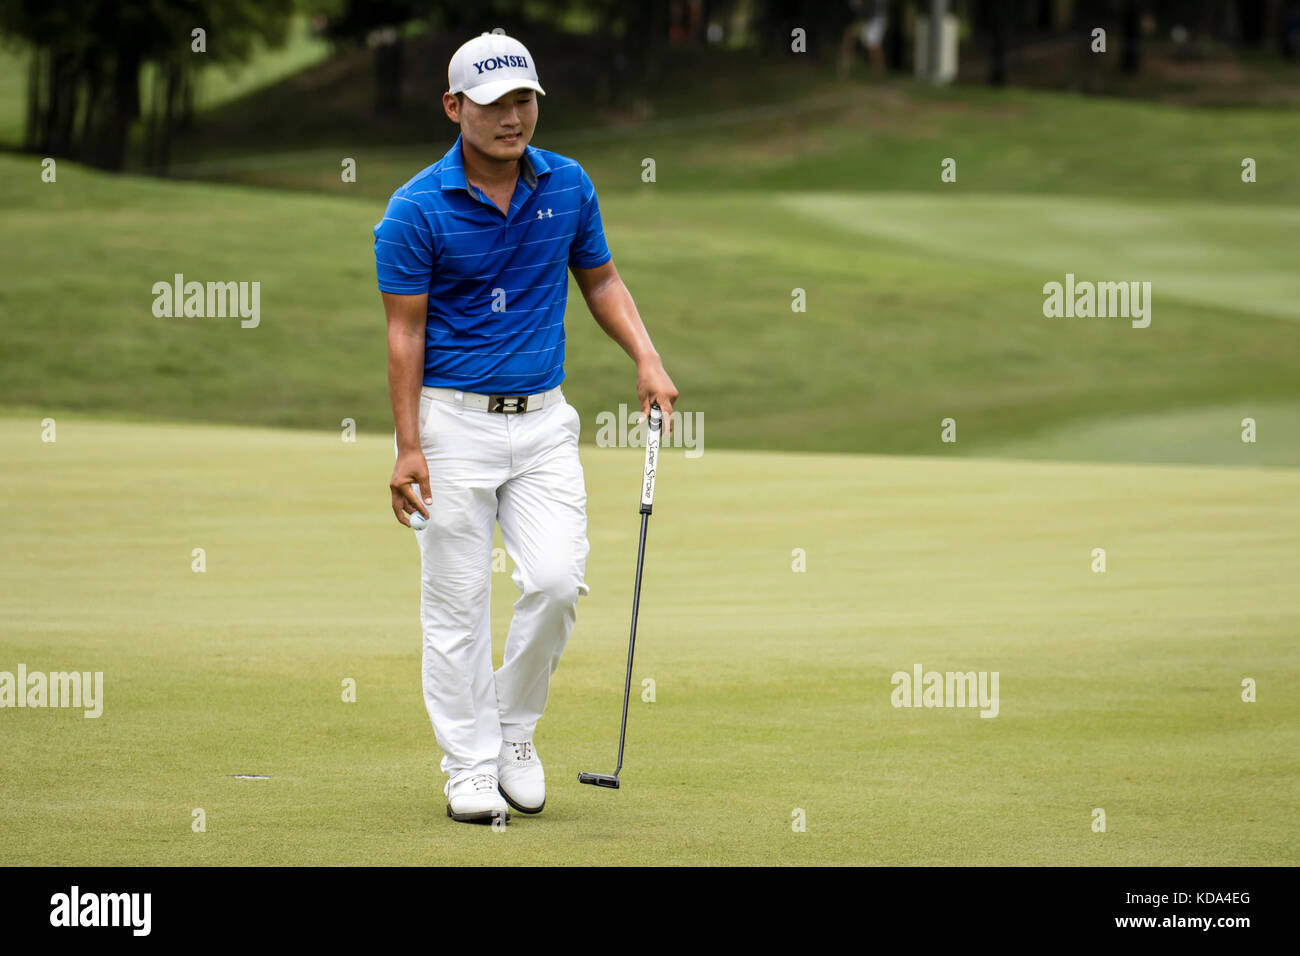 Kuala Lumpur, Malaysia. 12th Oct, 2017. Korean Sung Kang sink his shot on the 5th hole green at the PGA CIMB Classic 2017 golf tournament in Kuala Lumpur, Malaysia. Credit: Danny Chan/Alamy Live News Stock Photo